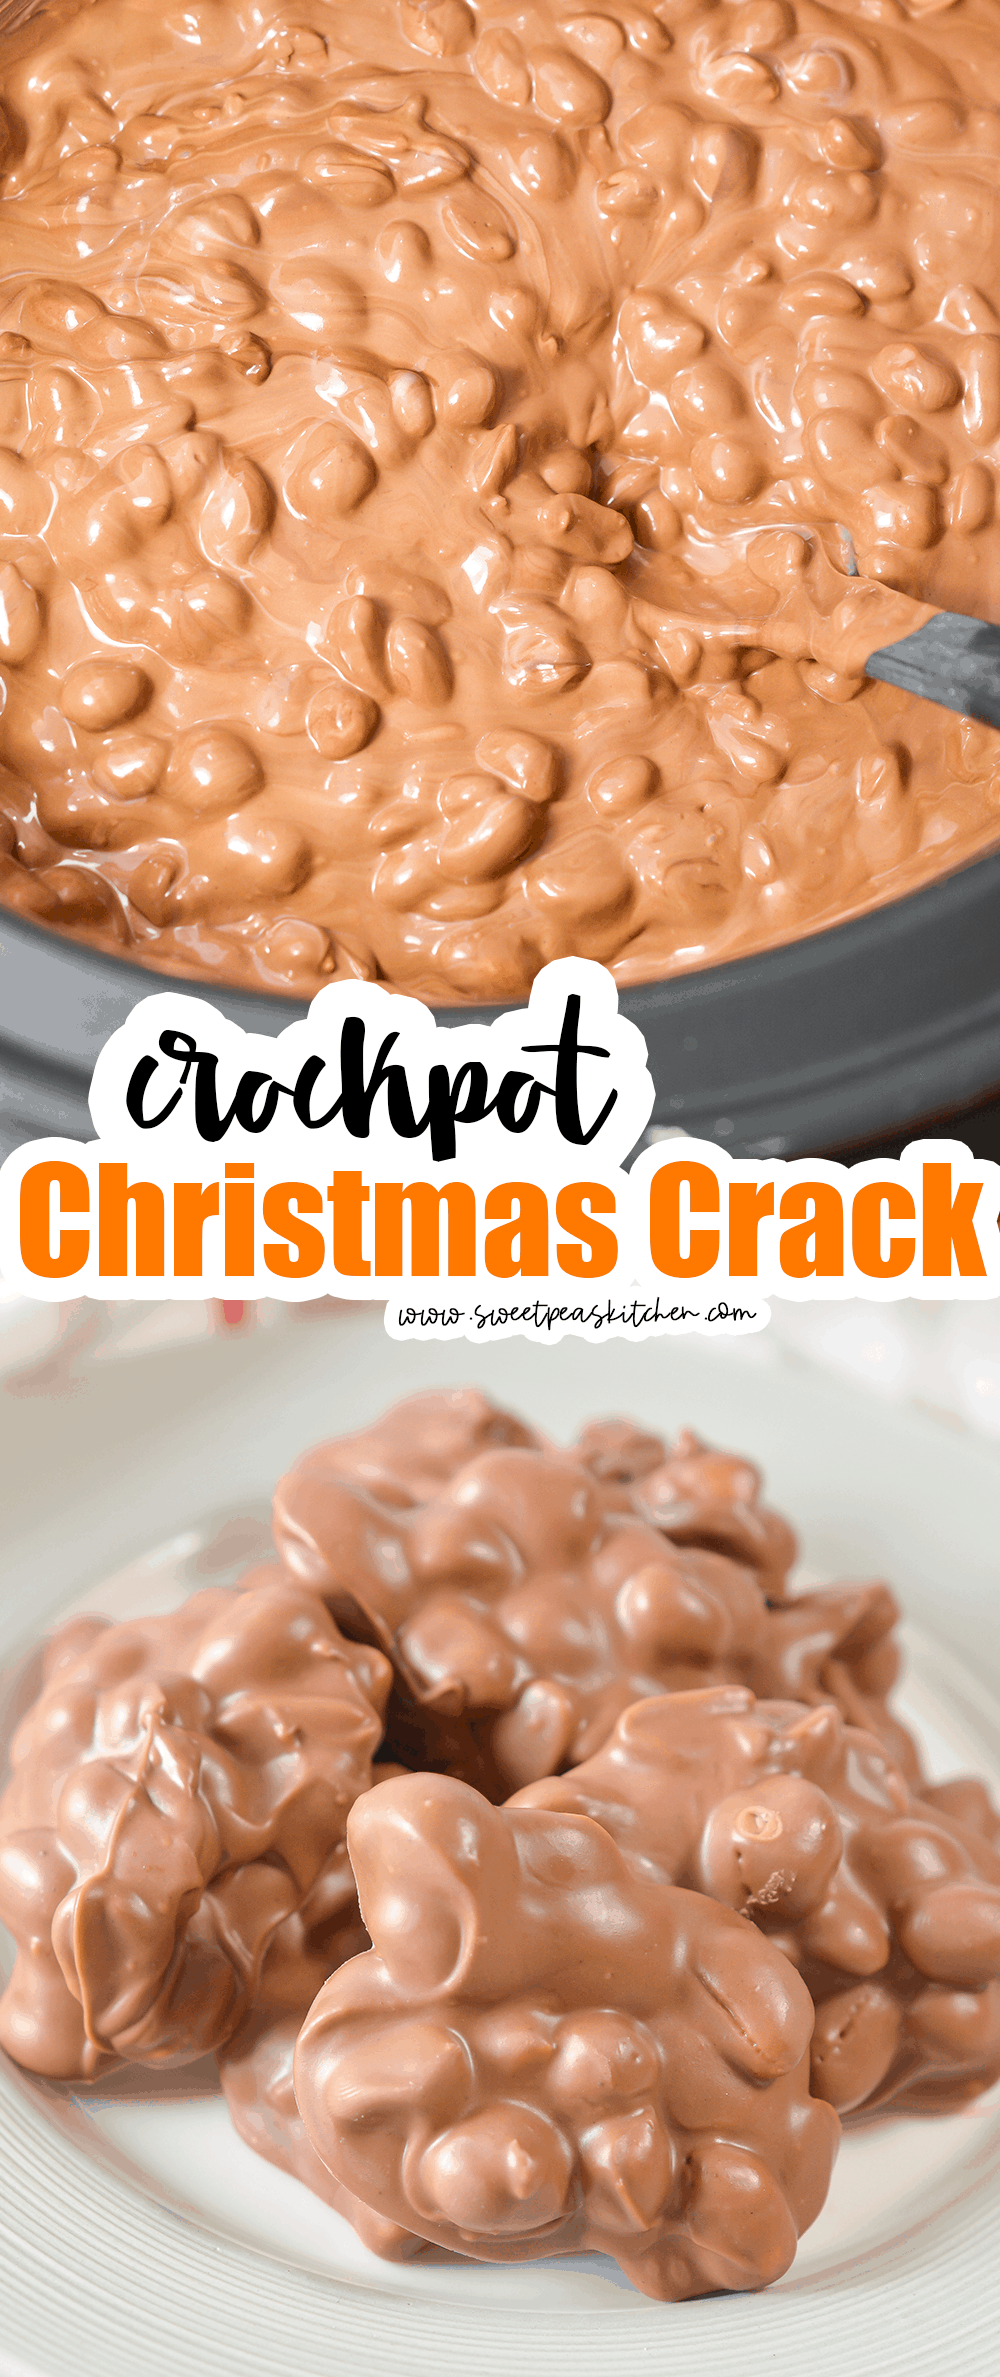 Crockpot Christmas Crack